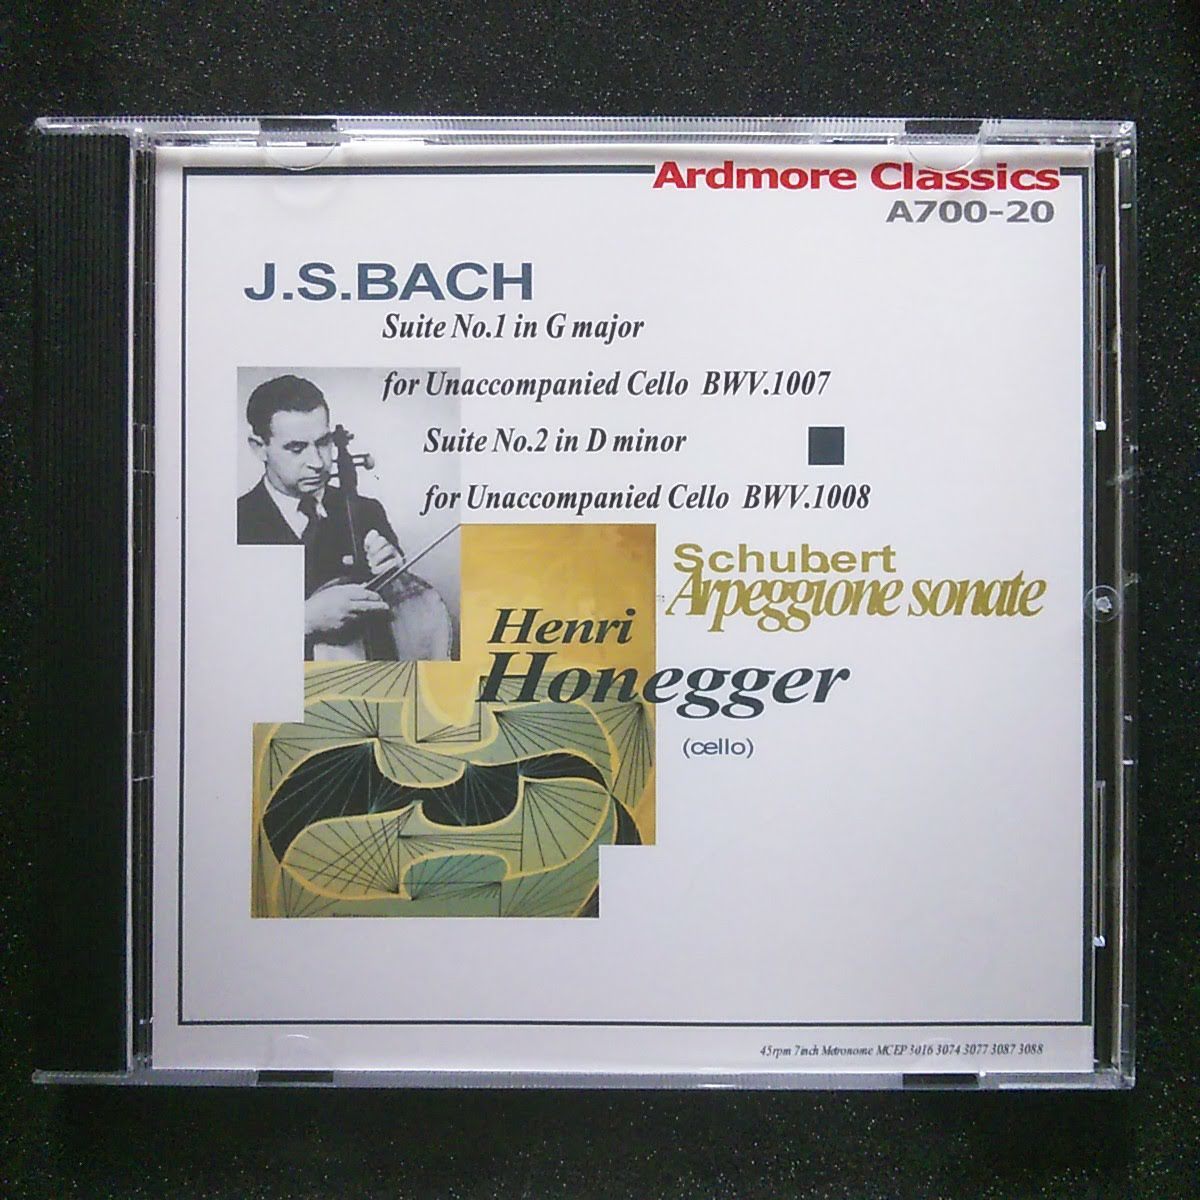 u（CD-R）アンリ・オネゲル、バッハ「無伴奏チェロ組曲第１番」シューベルト「アルペジョーネ・ソナタ」他（Honegger Bach Schubert）_画像1